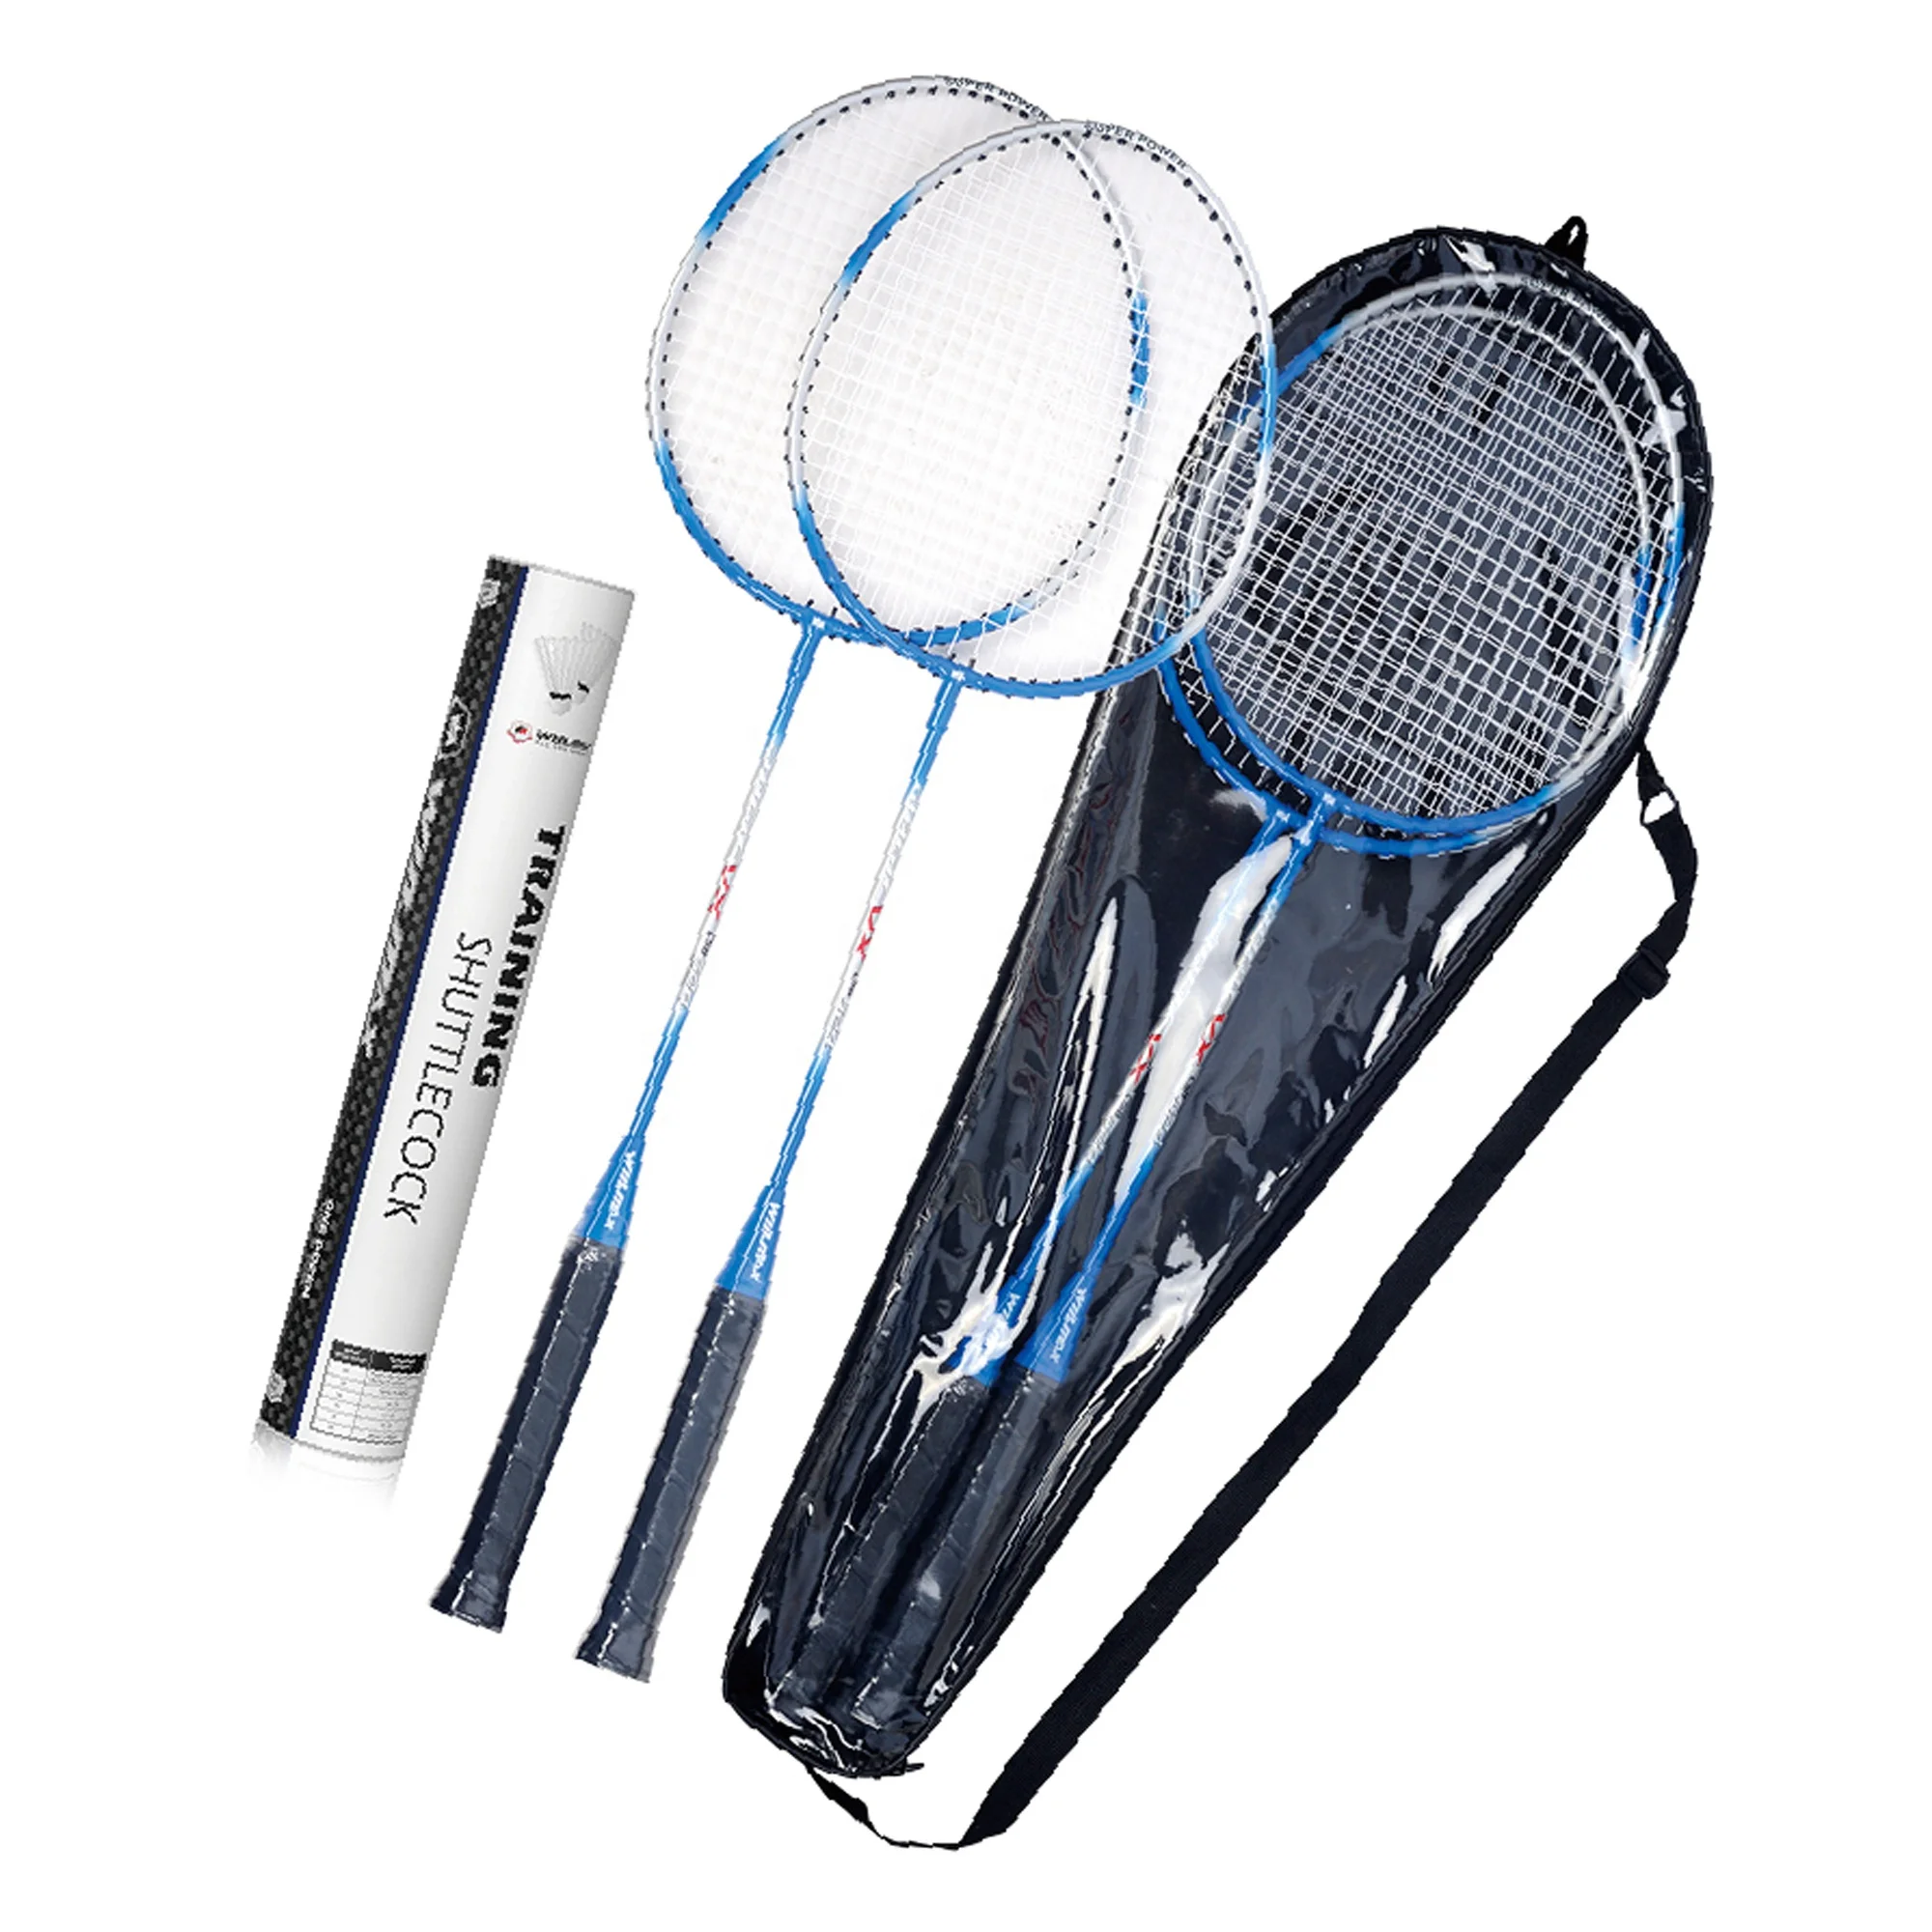 

WINMAX hot sale stock lining badminton racket racquet set with 12 pcs nylon shuttlecocks, Blue